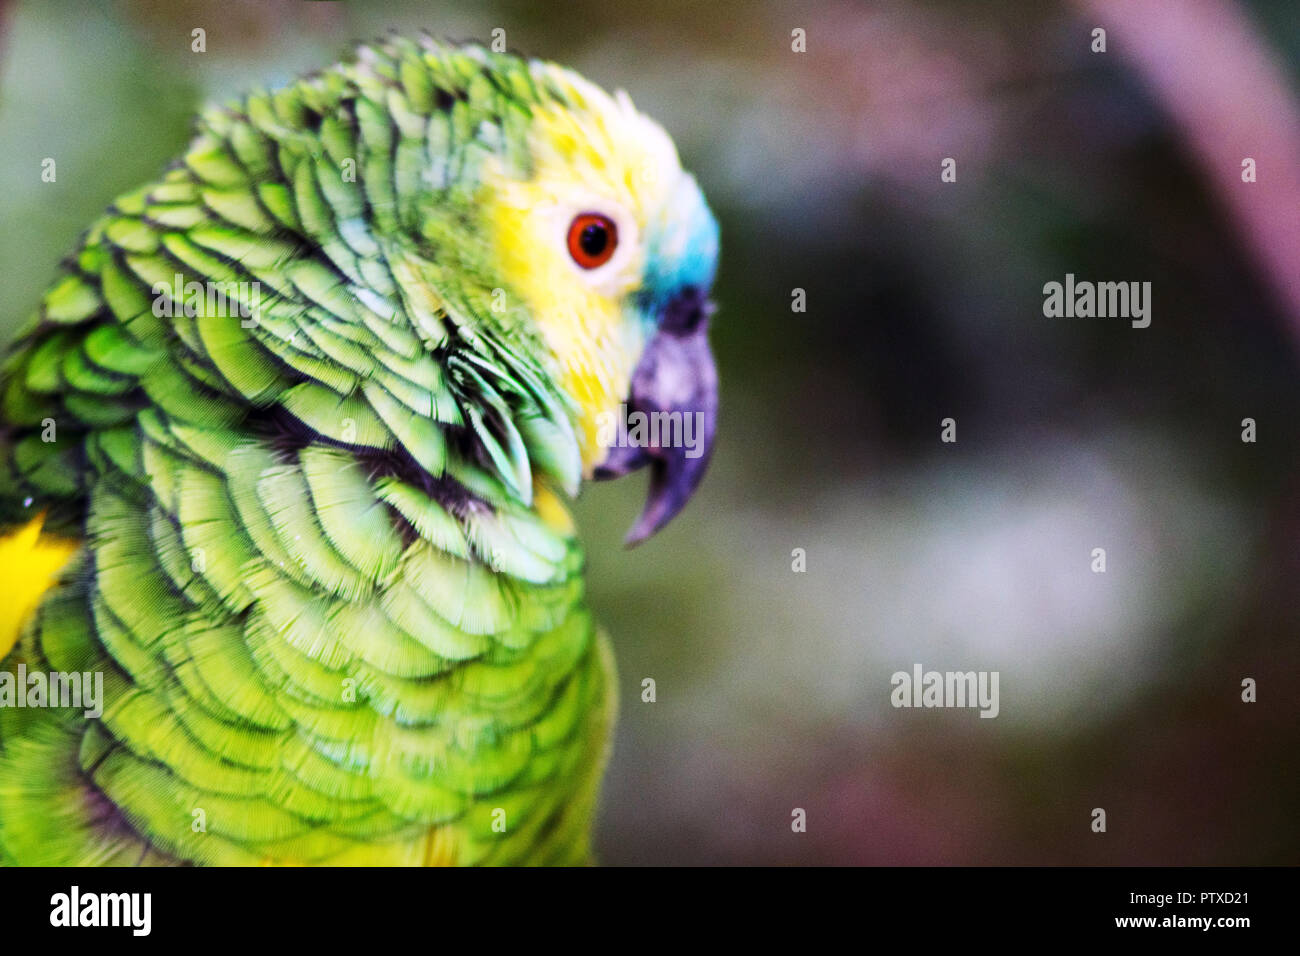 Porträt einer Yellow-Crowned Amazon Papagei Vogel Stockfotografie - Alamy